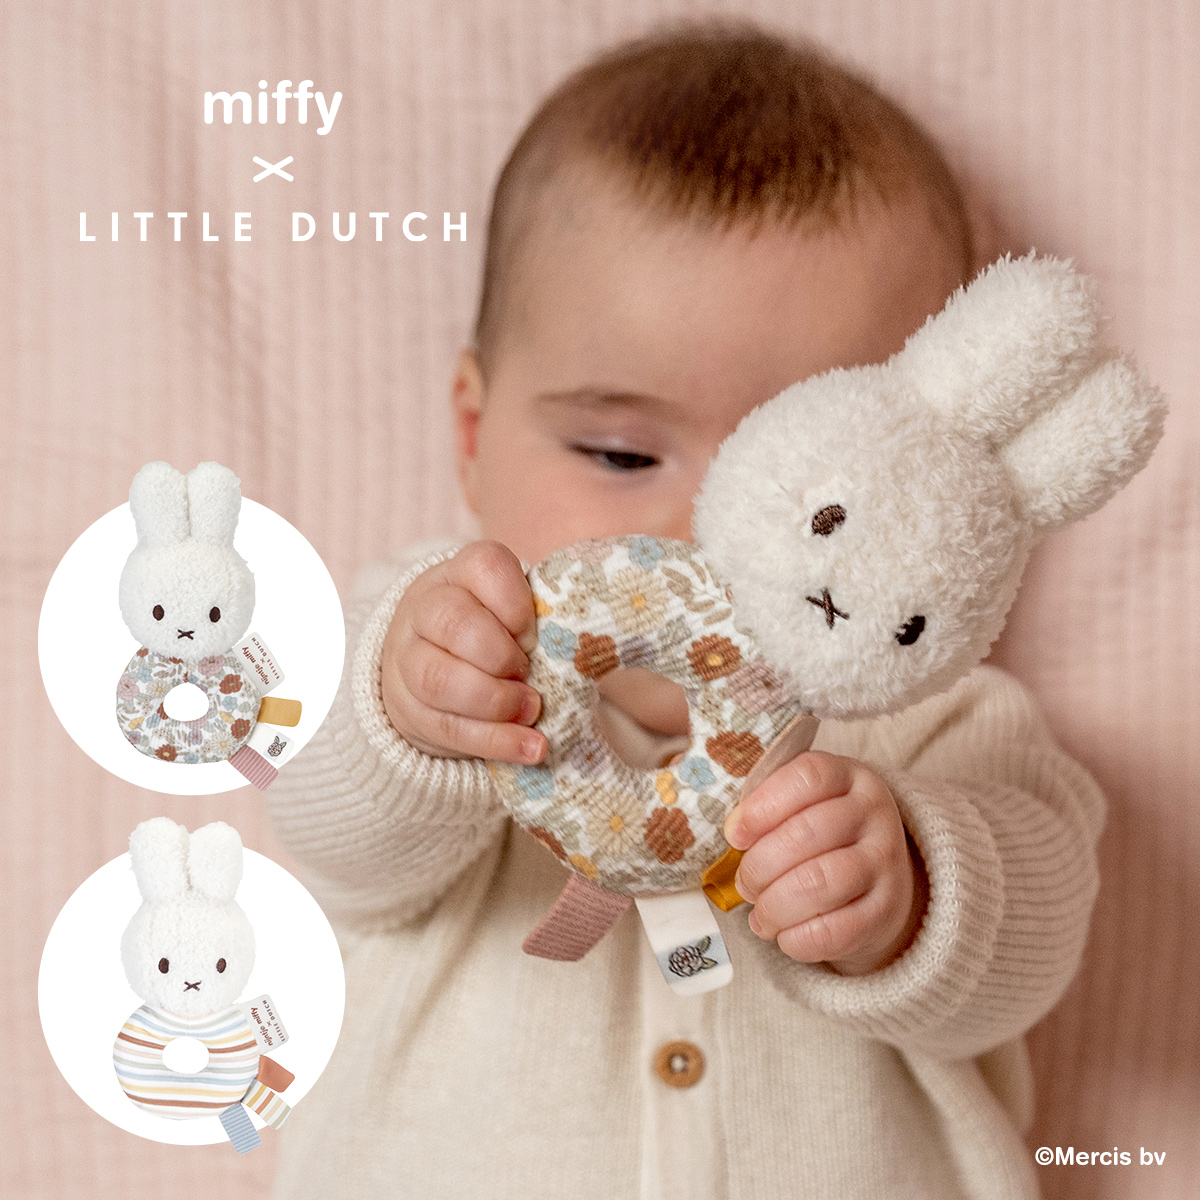 |NEW| Little Dutch miffy x Little Dutch Miffy little Dodge baby rattle l Vintage little flower Sunny stripe present gift ...